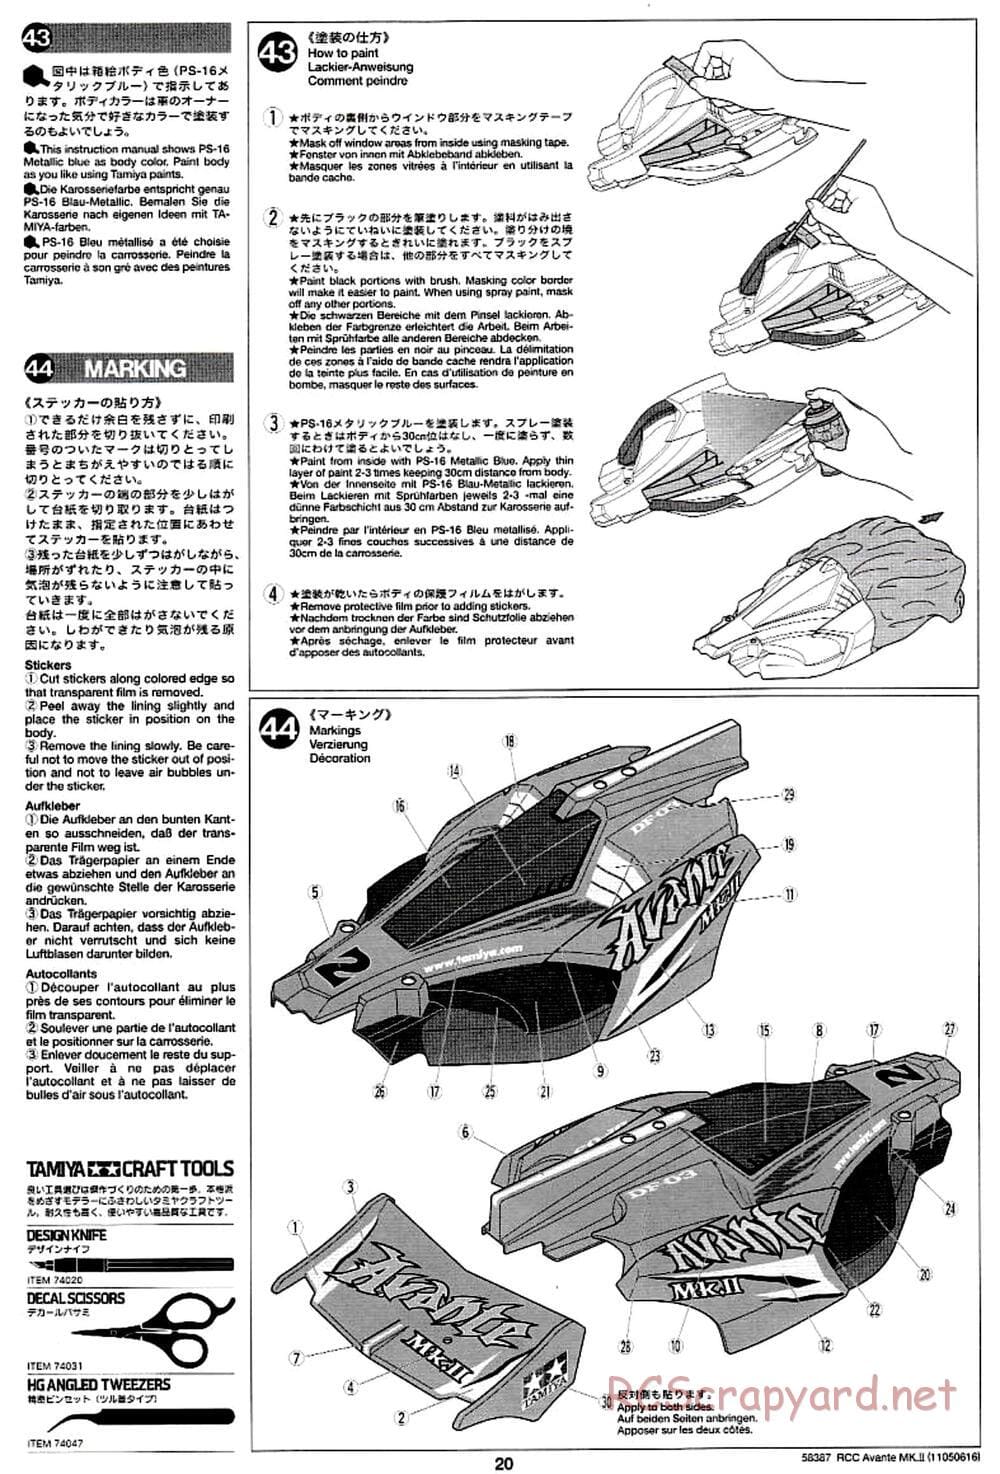 Tamiya - Avante Mk.II Chassis - Manual - Page 20